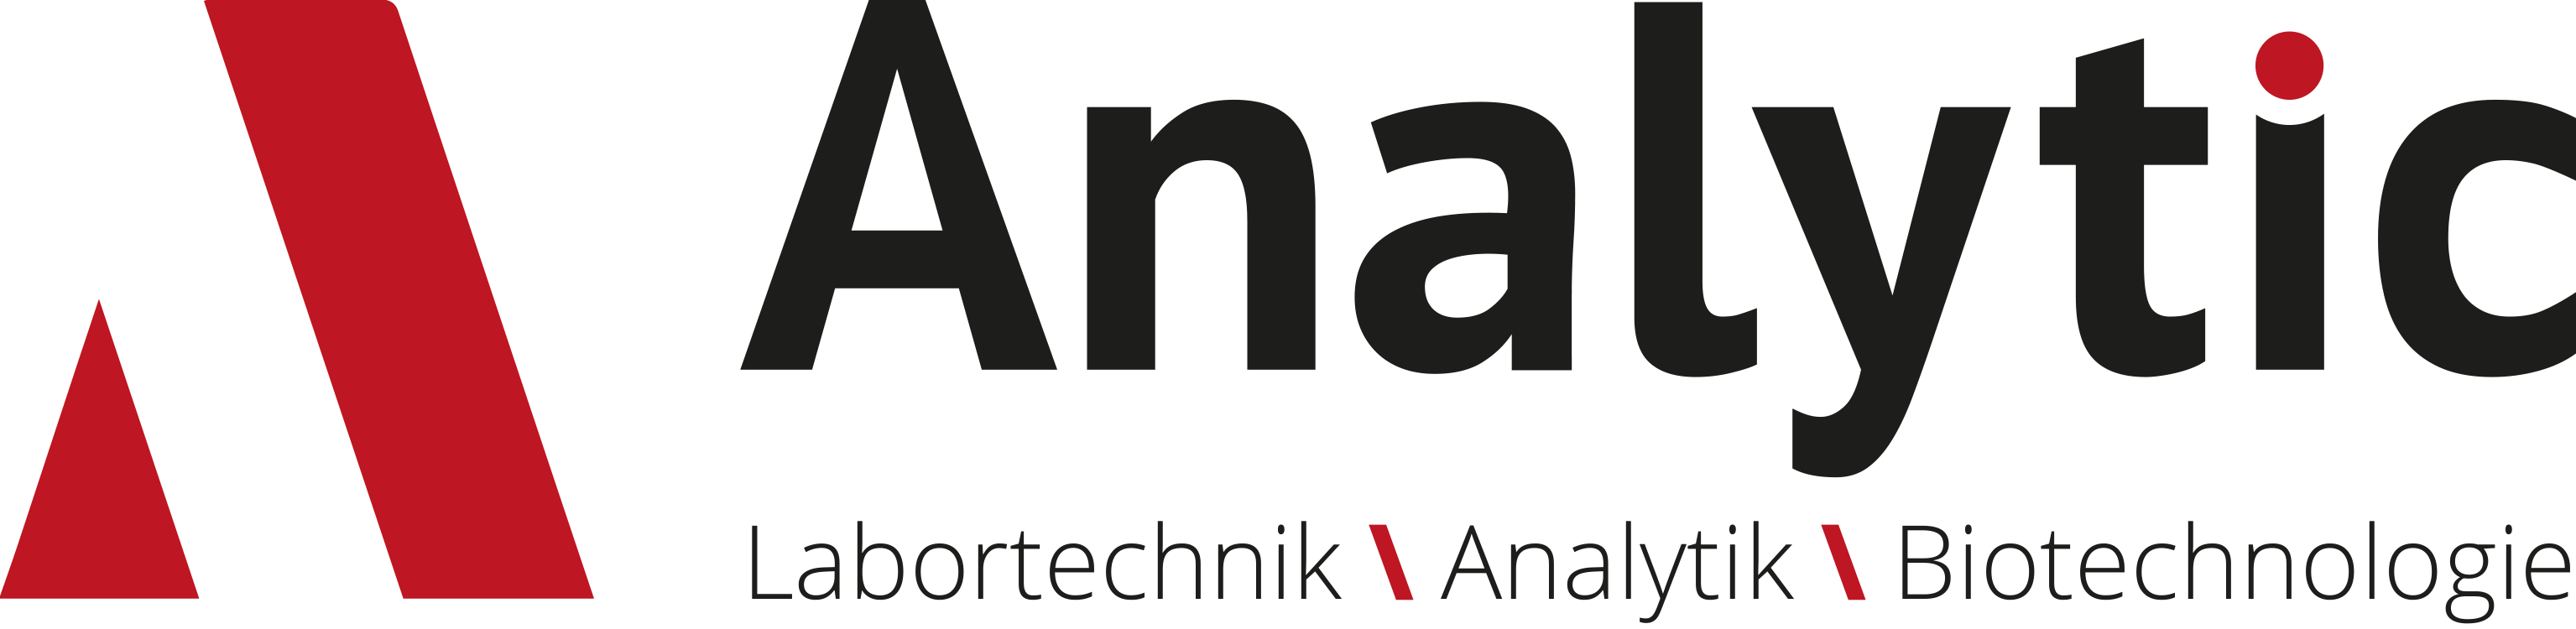 analytic logo